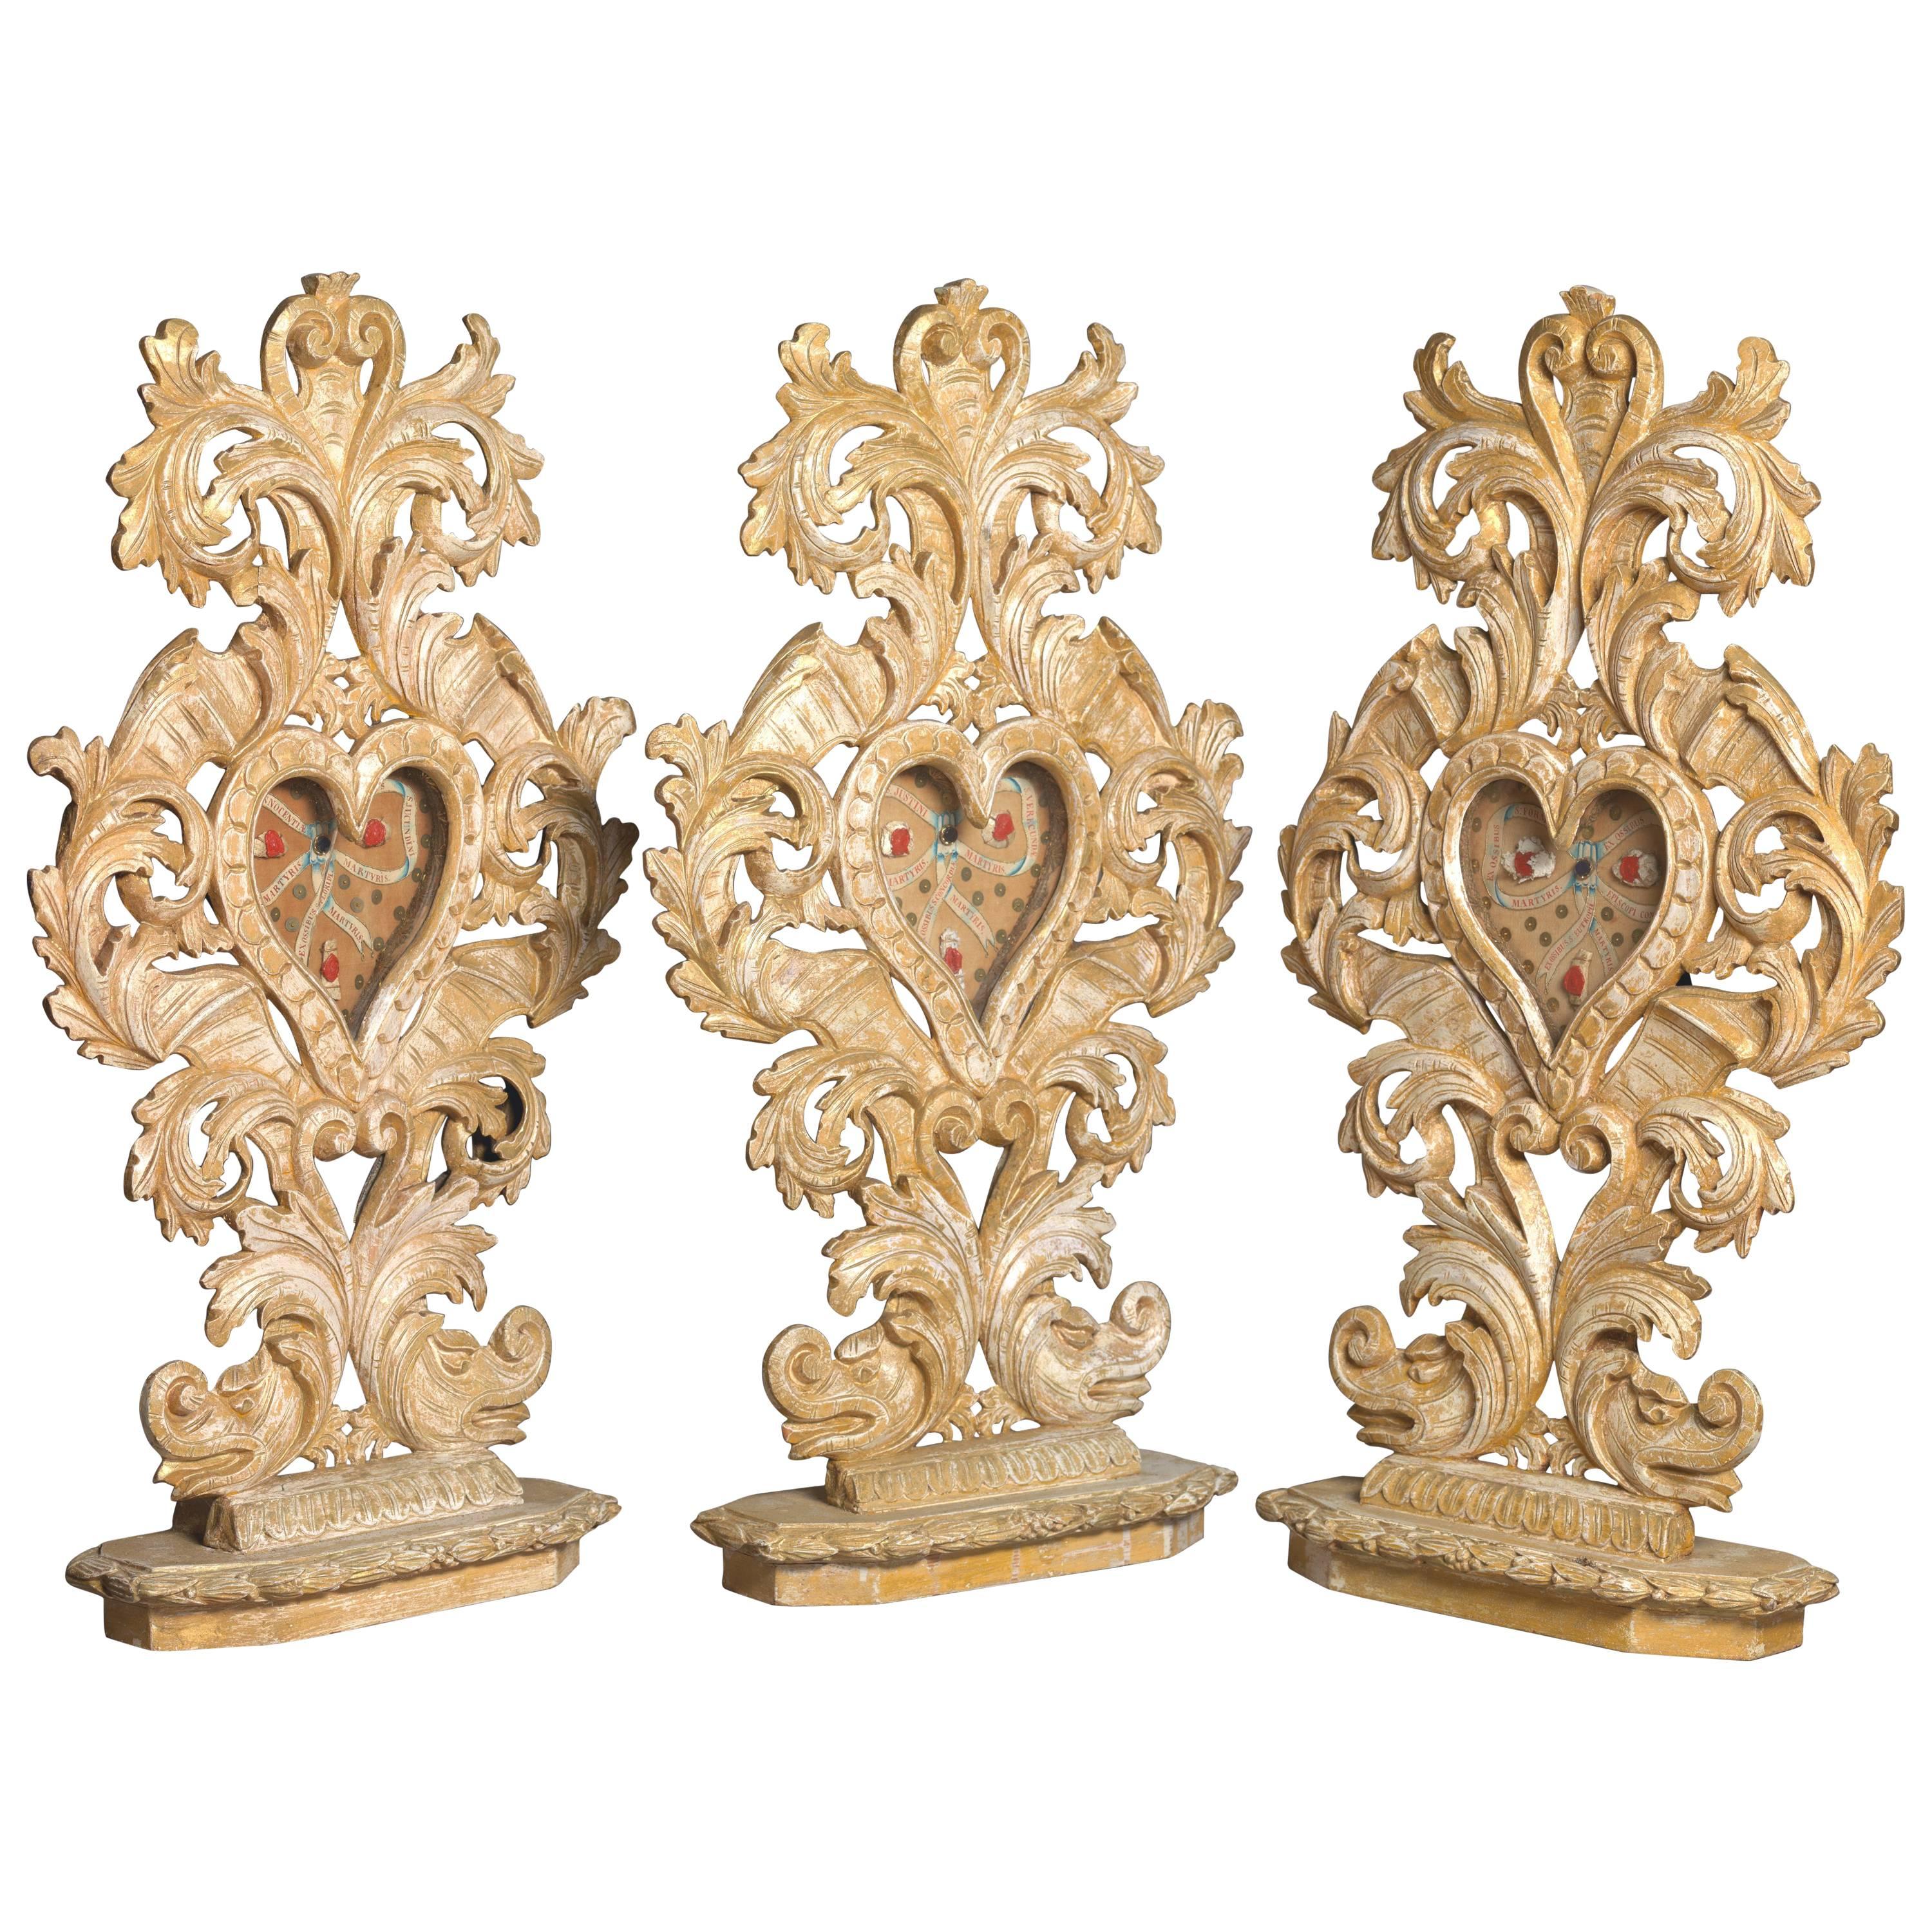 Set of Three Wooden Catholic Reliquaries, 18th Century